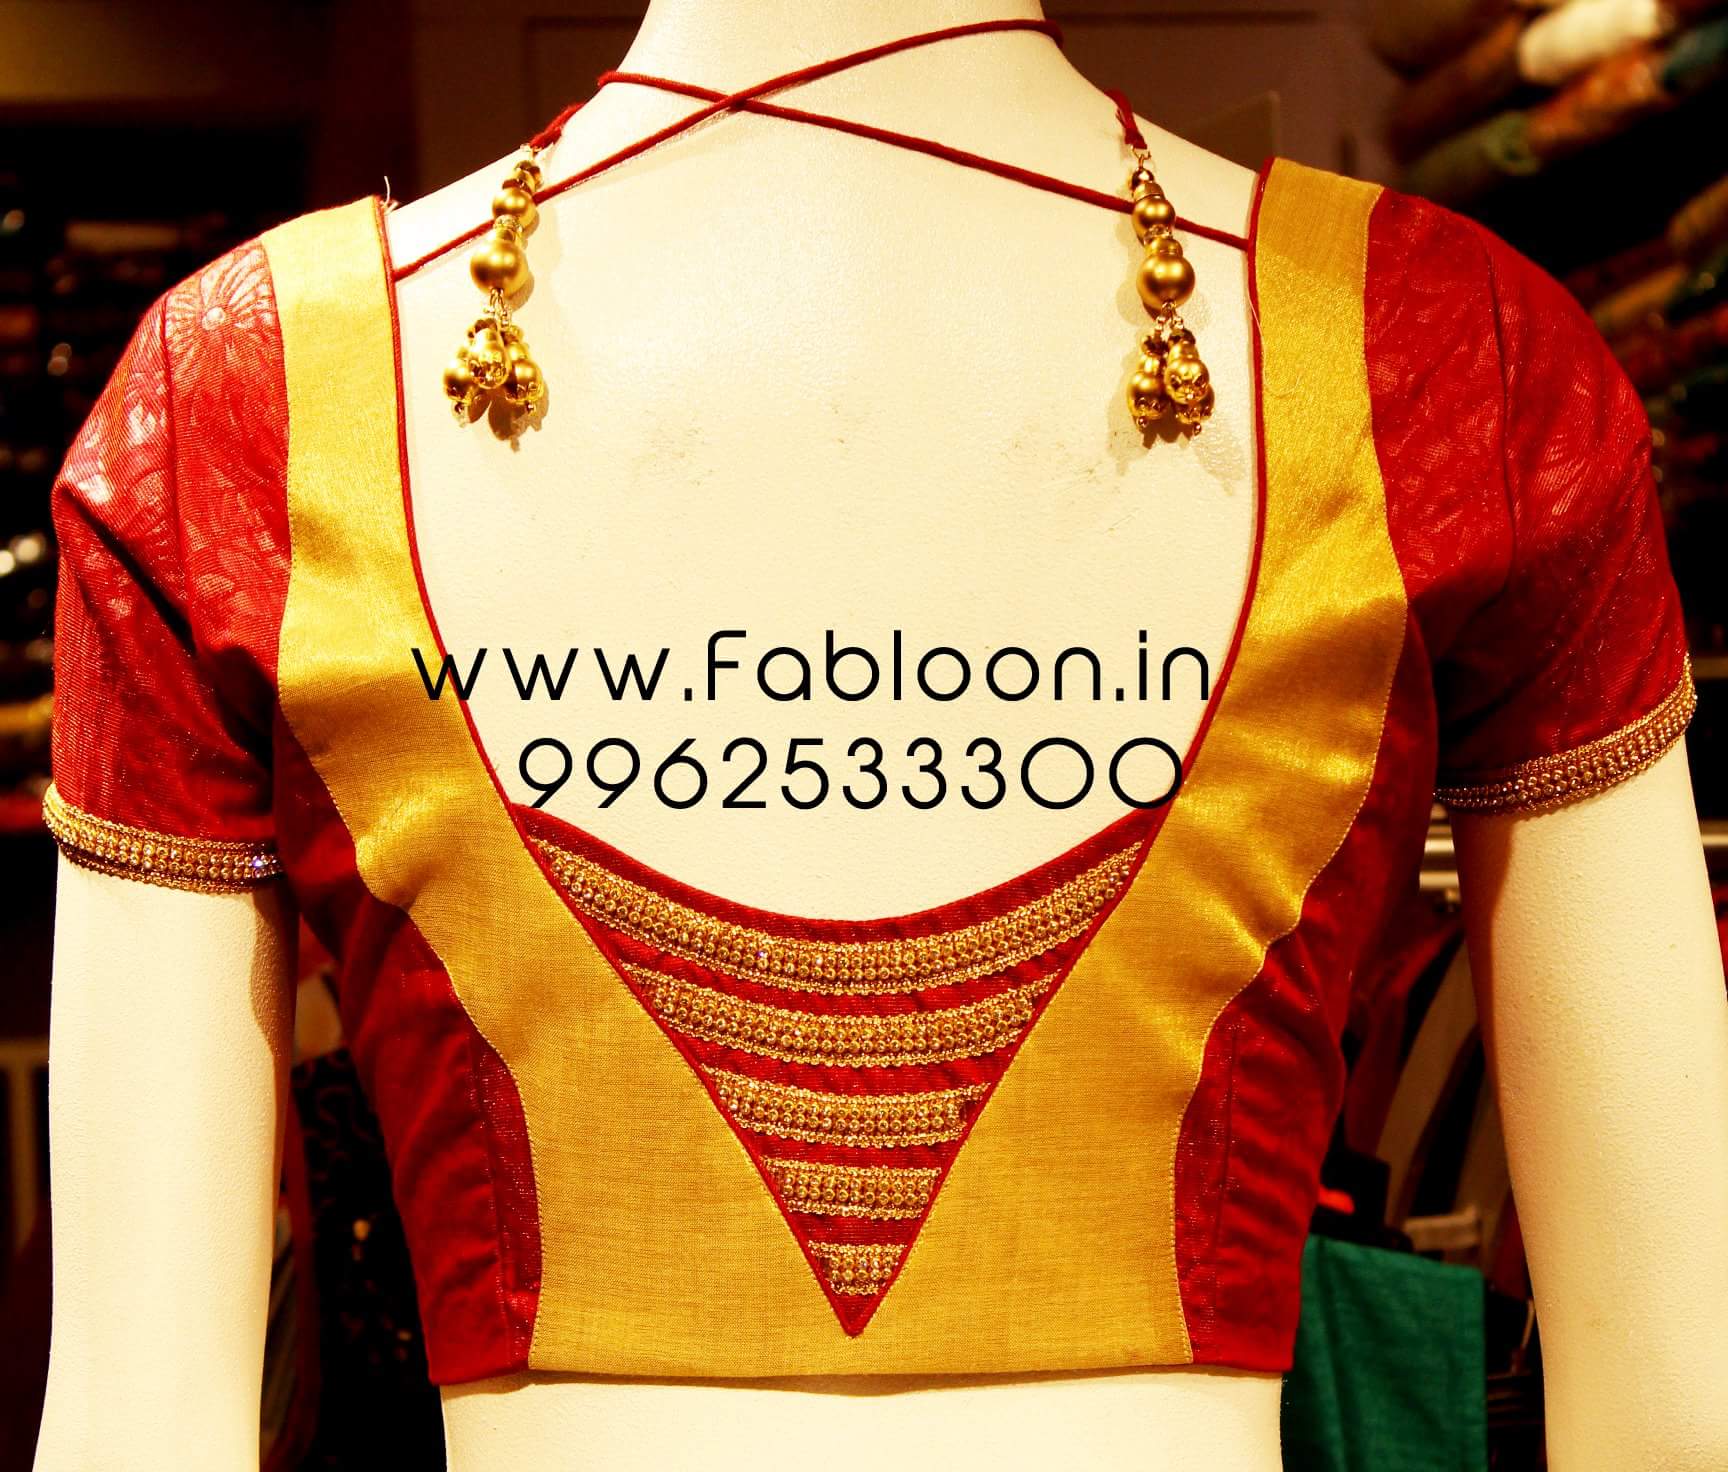 Top 16 Tailors To Stitch Wedding Designer Blouses In Chennai Keep Me Stylish,Boutique Fashion Designer Studio Interior